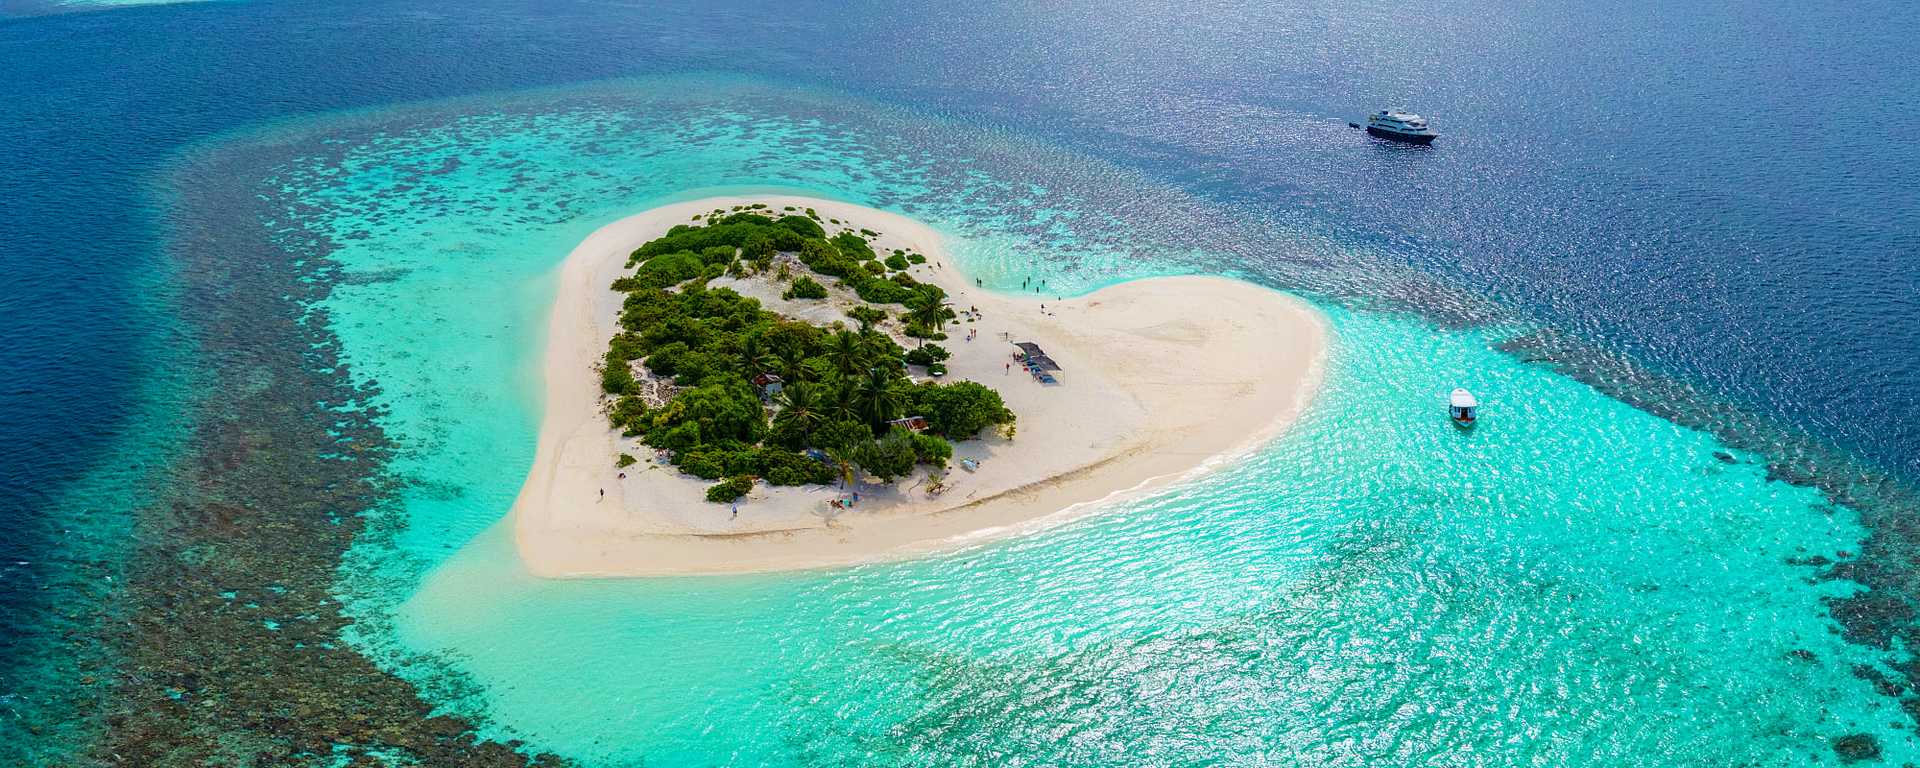 Romantic heart-shaped island in the Maldives